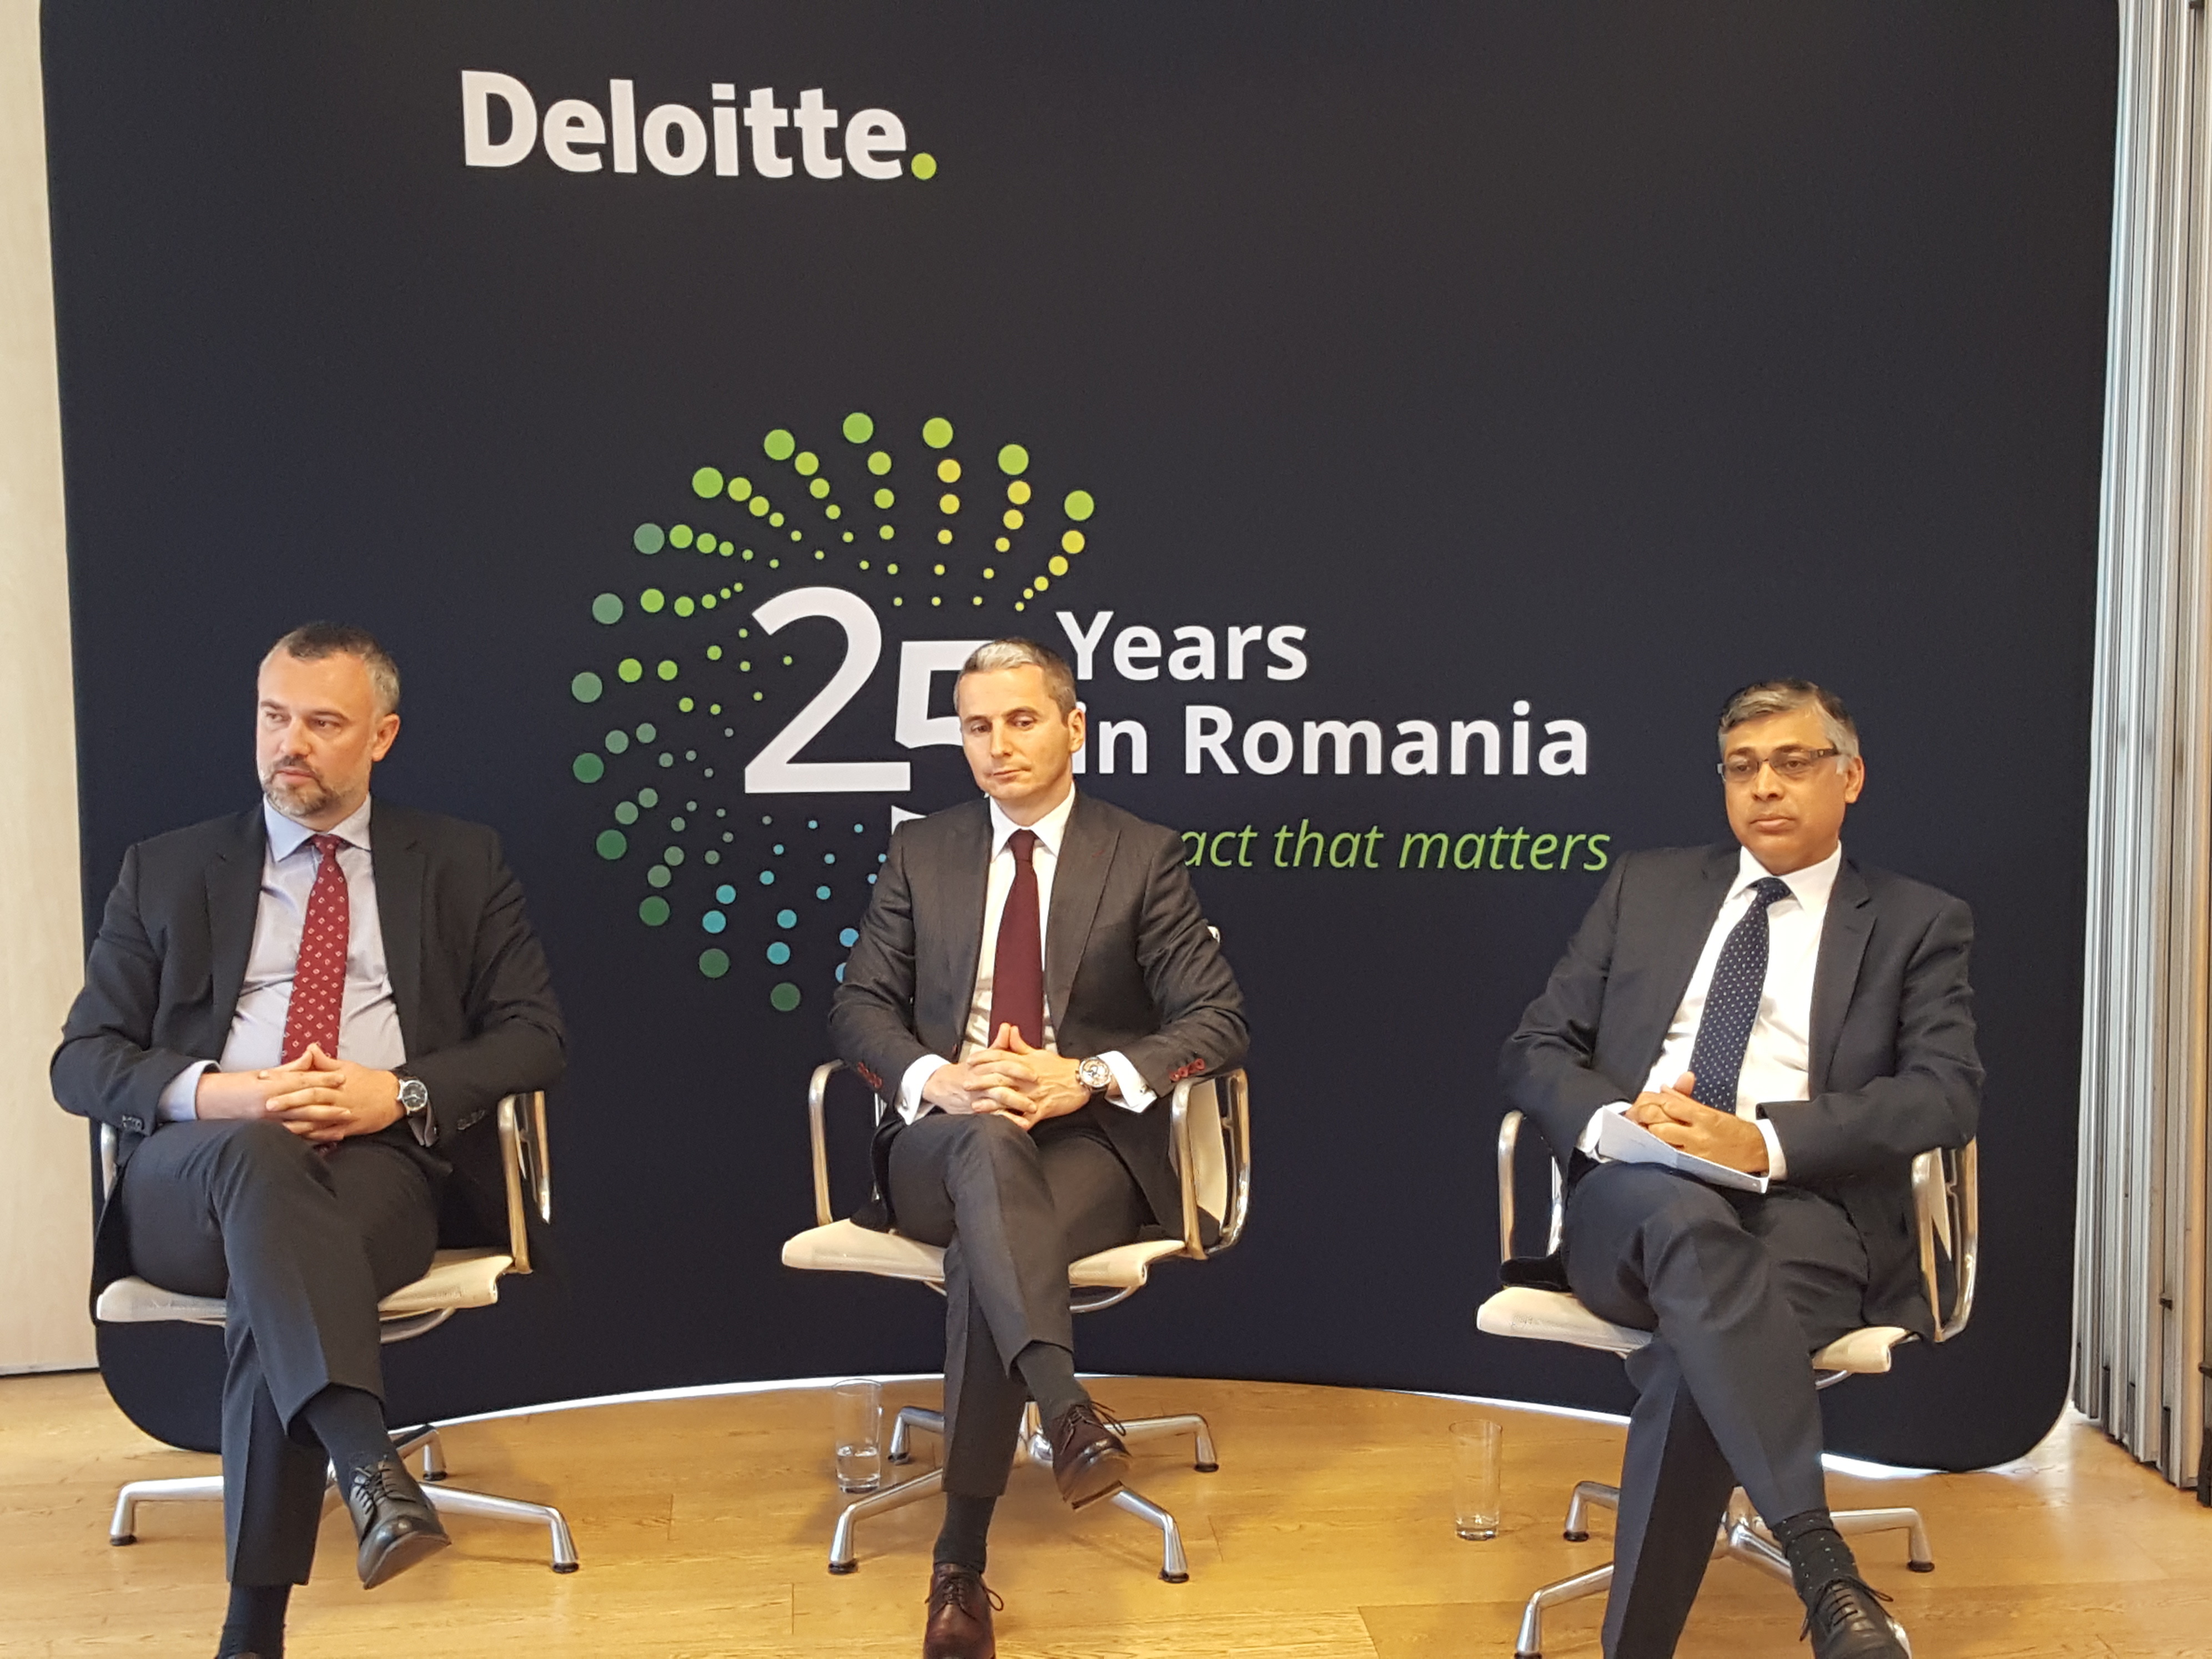 Alexandru Reff preia poziţia de conducere a Deloitte România de la 1 iunie